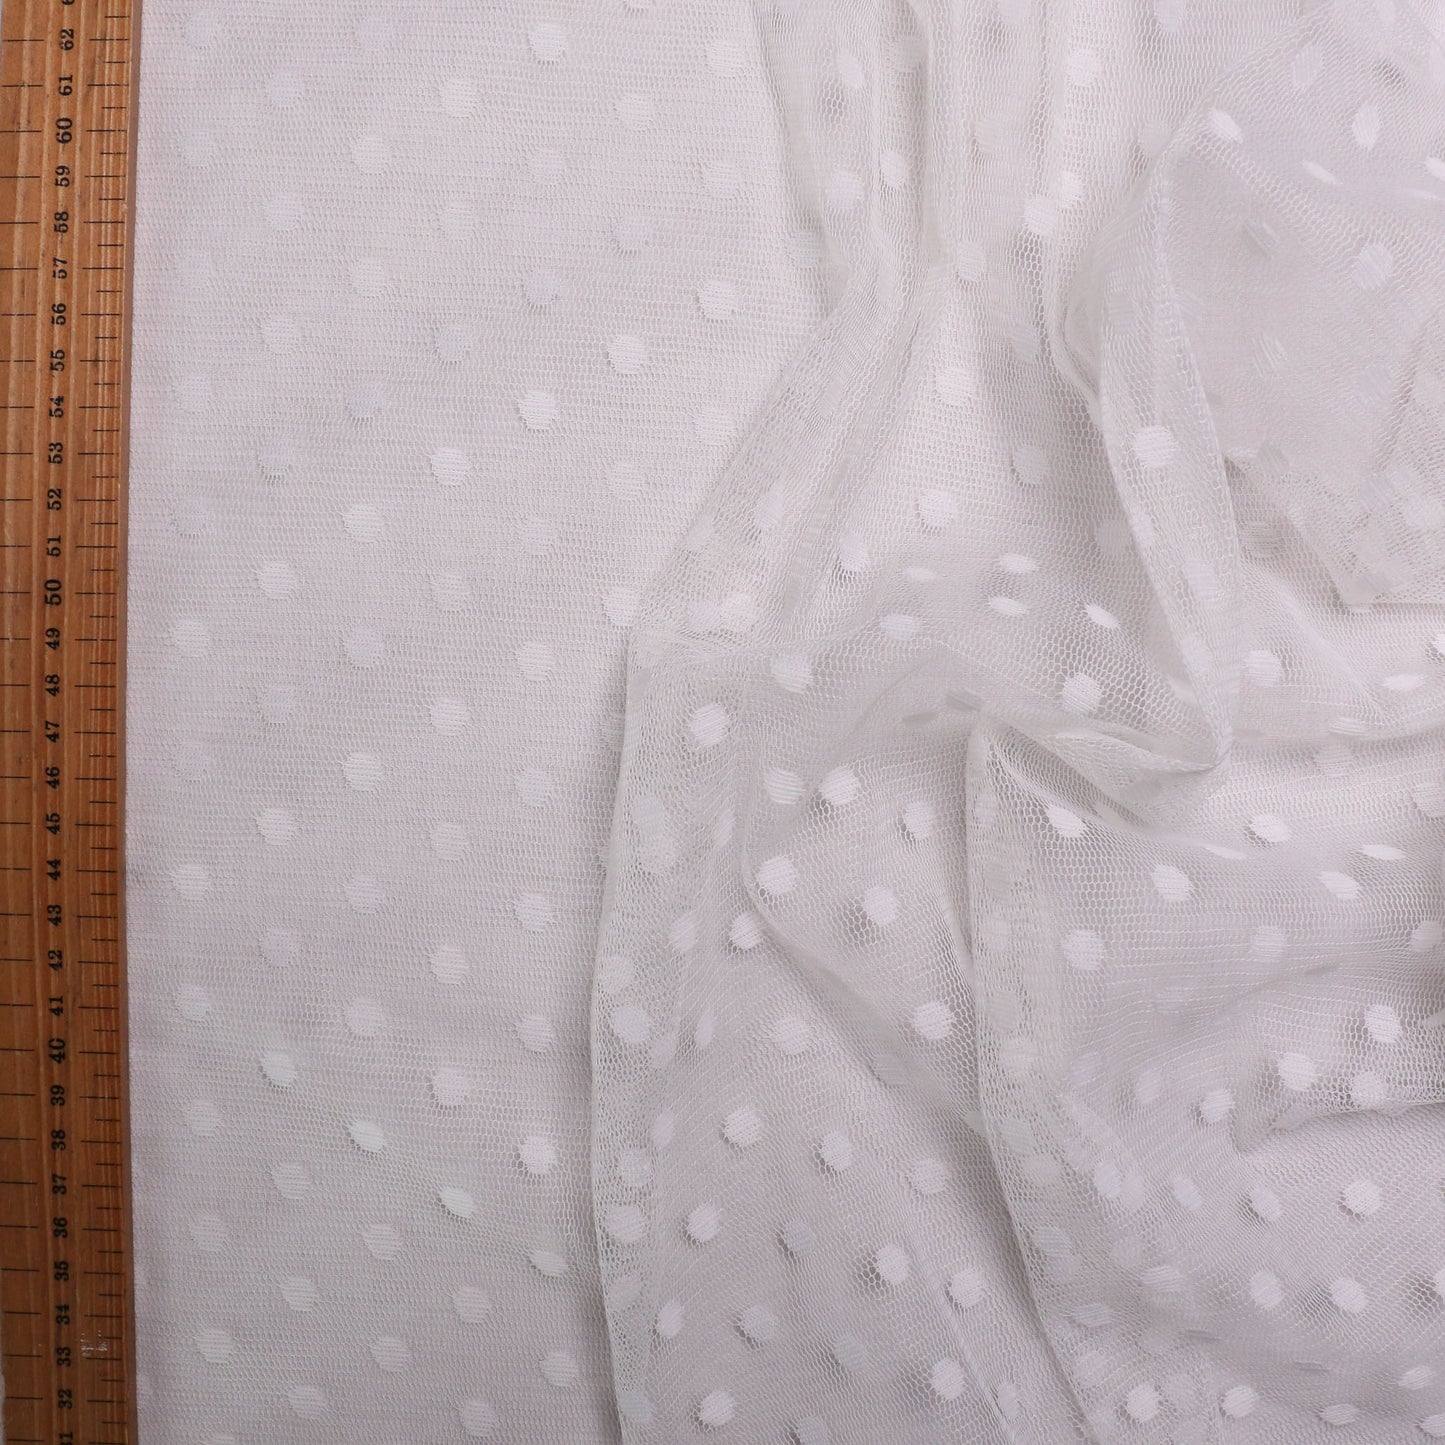 dressmaking fabric mesh with polka dot pattern